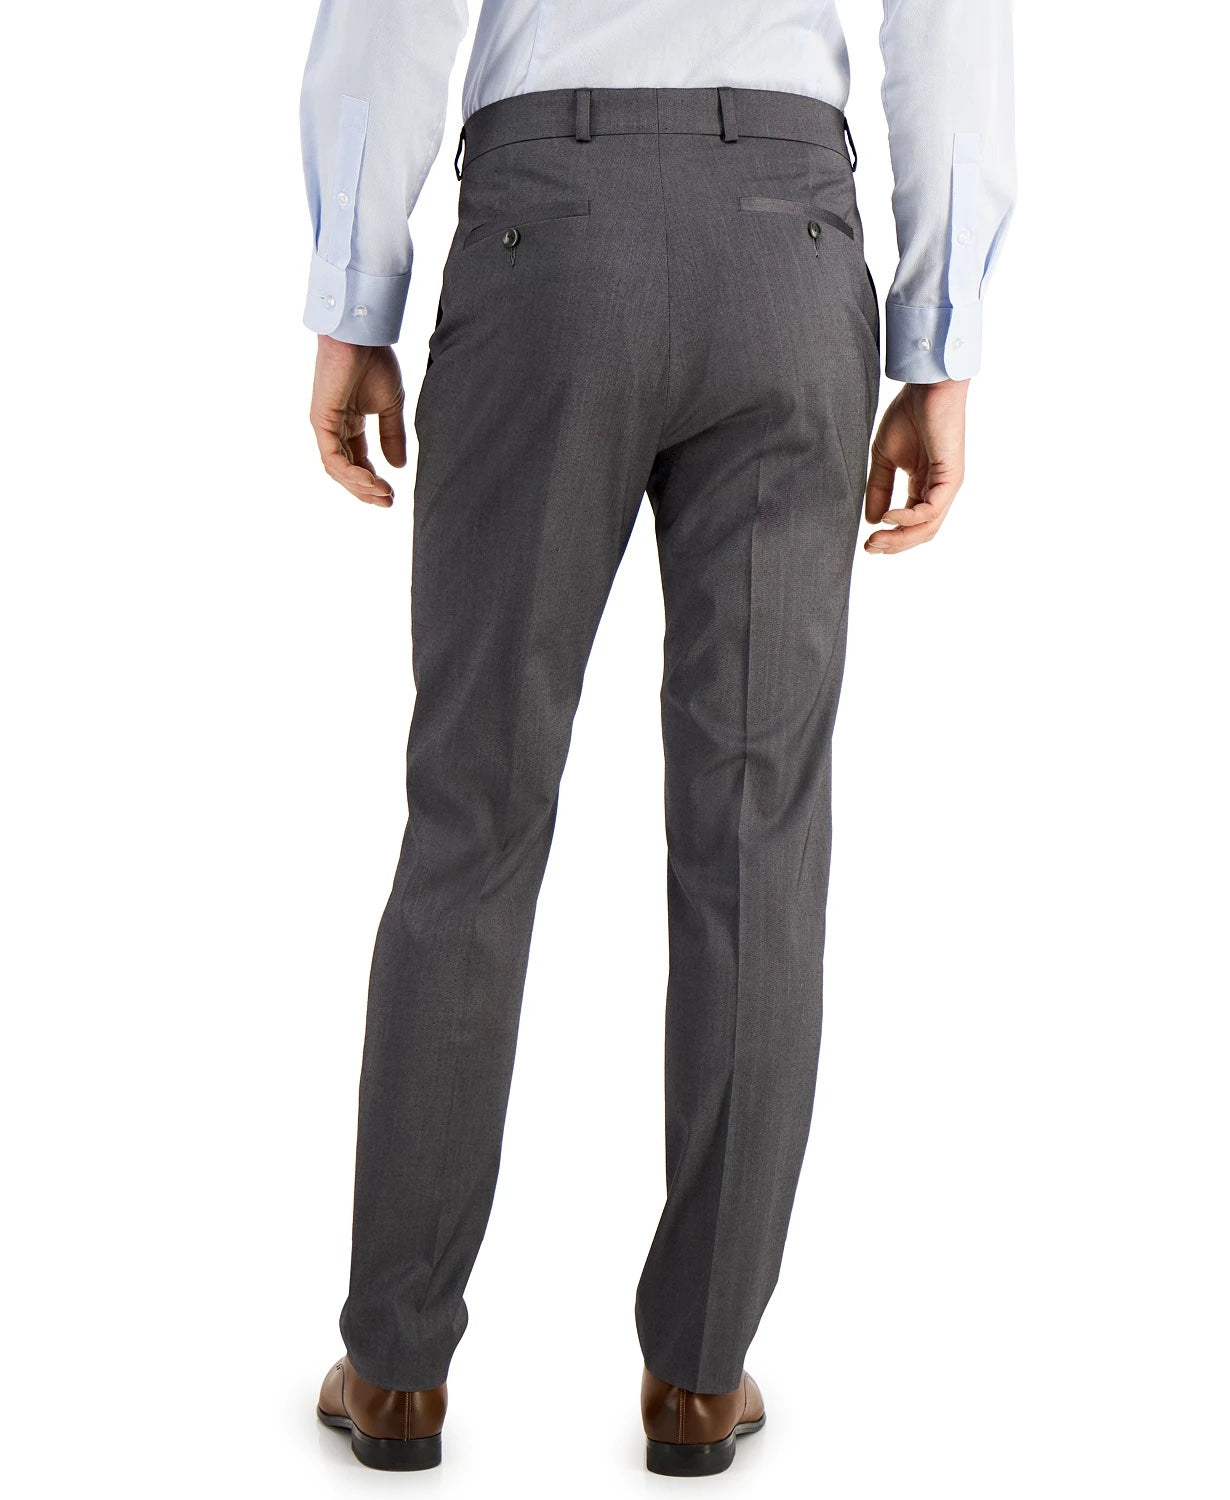 Kenneth Cole Reaction Mens Dress Pants 32 x 34 Grey Silver Techni-Cole Slim-Fit